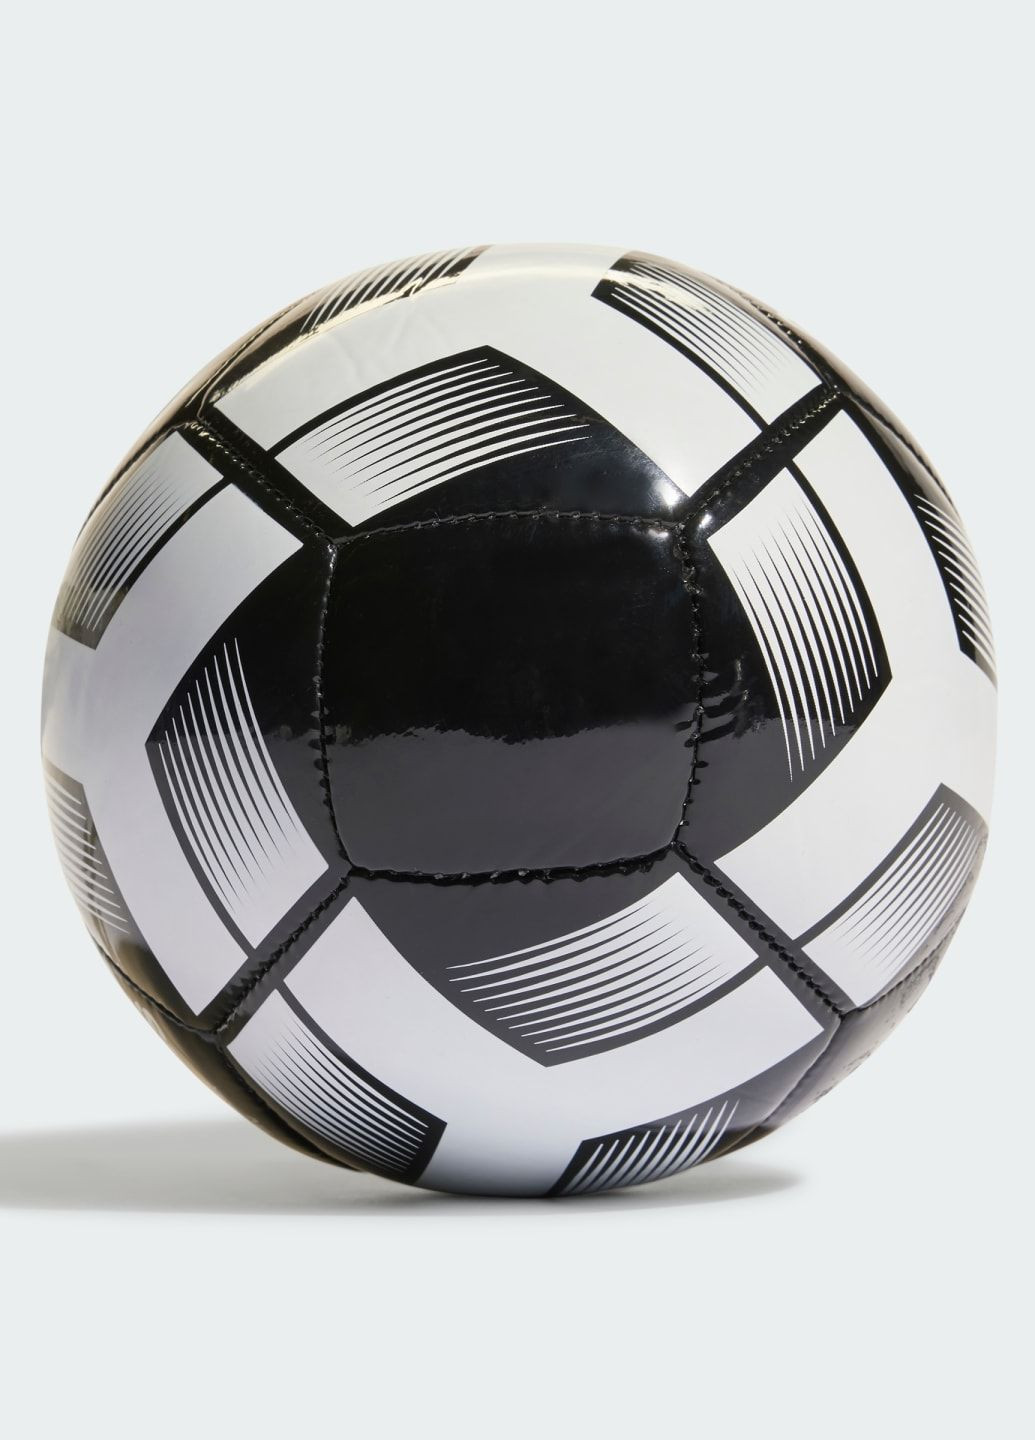 Футбольний м'яч Starlancer Mini adidas (281036149)